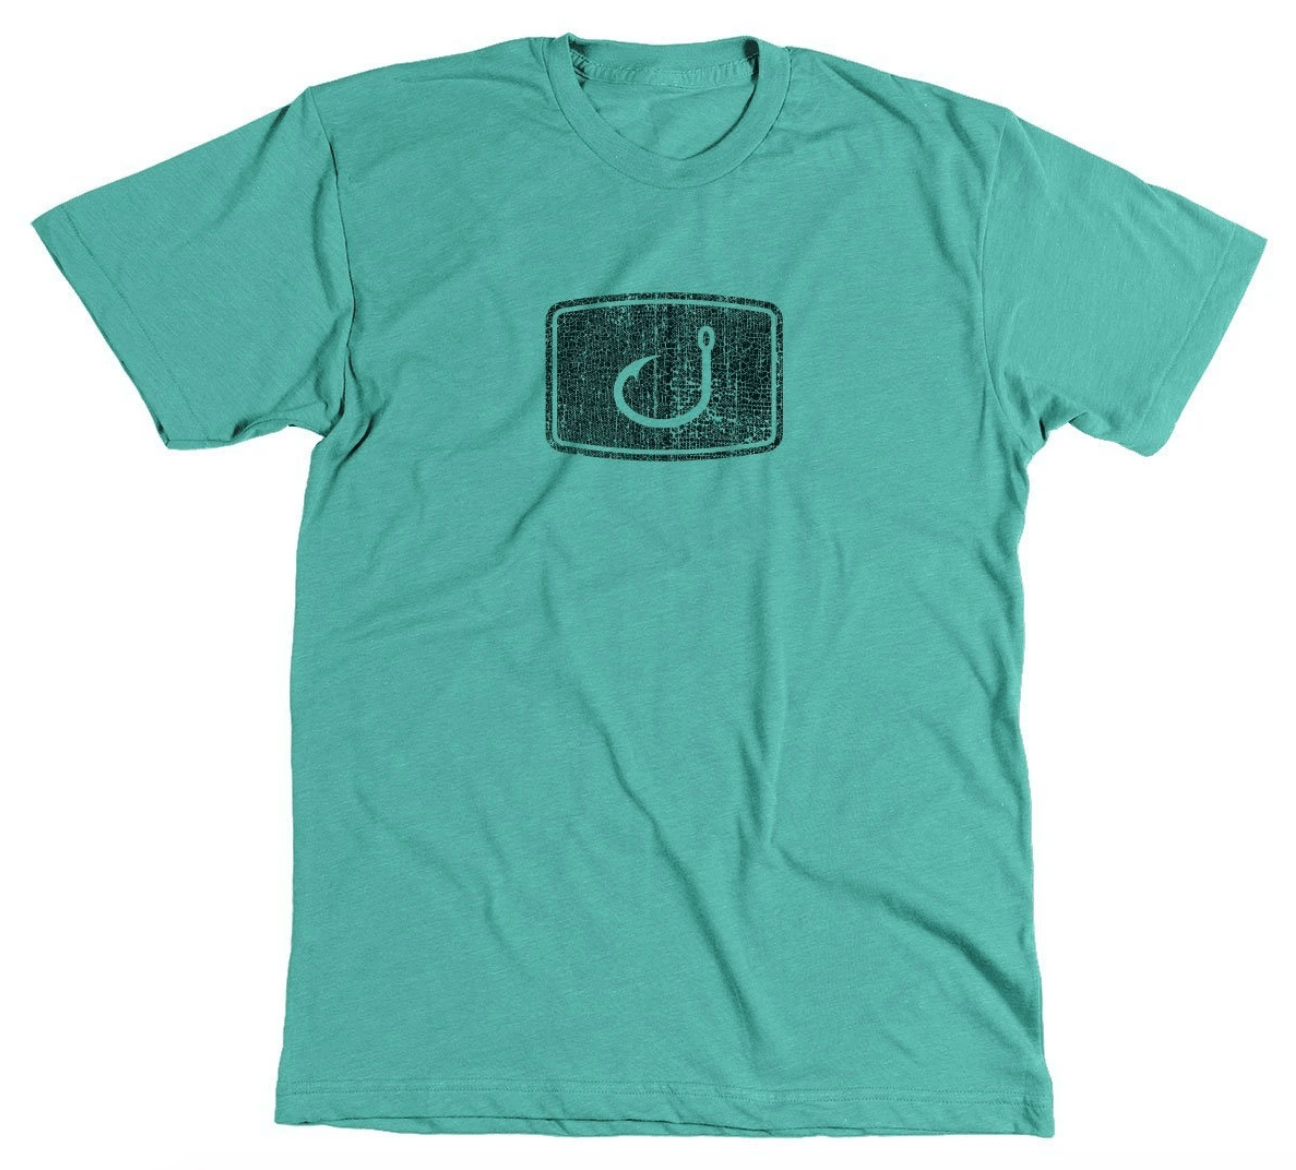 Avid Men's Tee Shirt Medium Avid, Men's Distressed Graphic Tee (Mint Green)